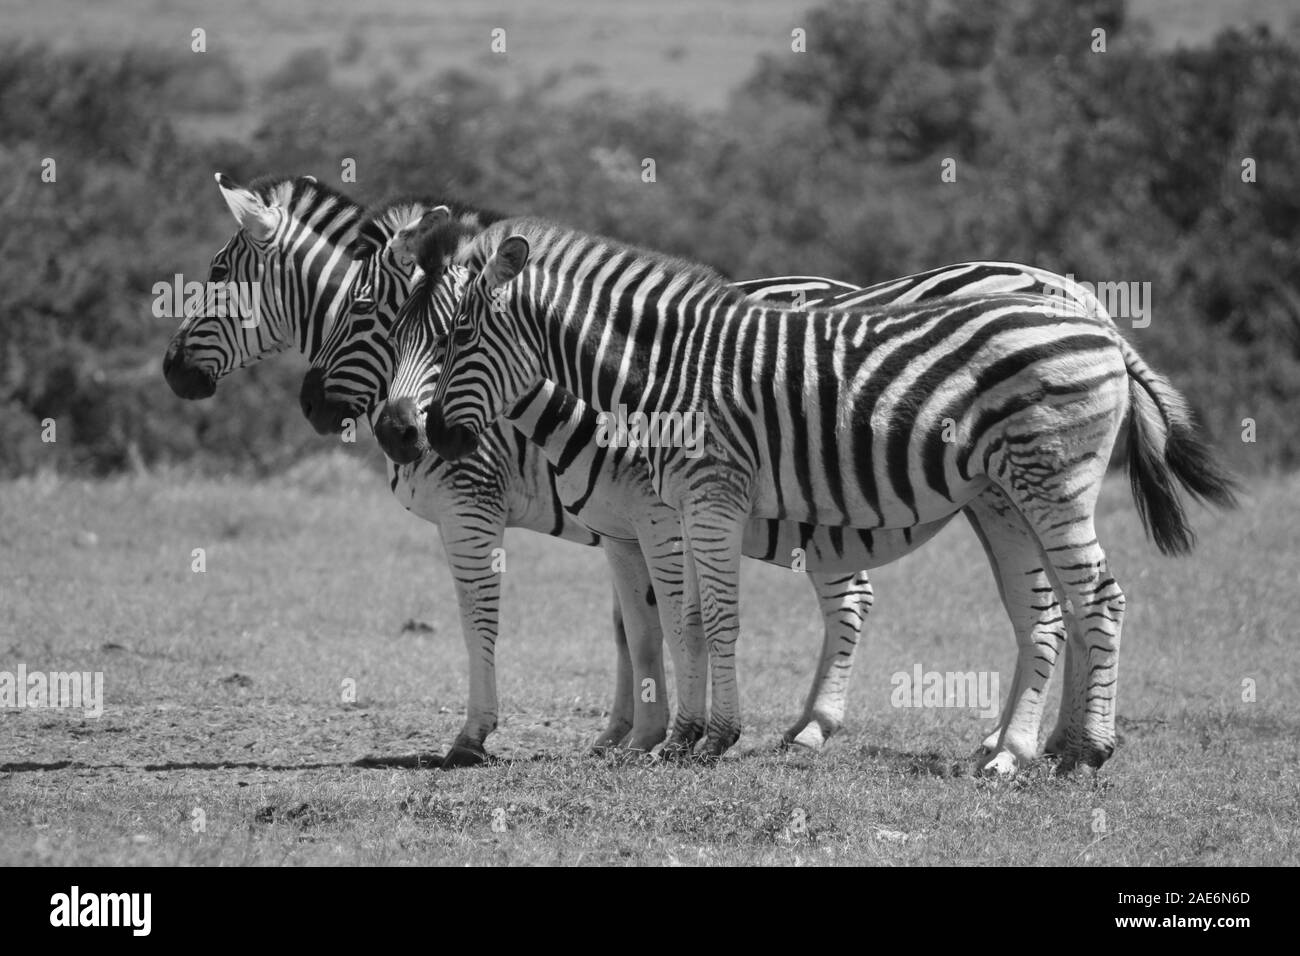 Un deslumbramiento de Zebra Foto de stock